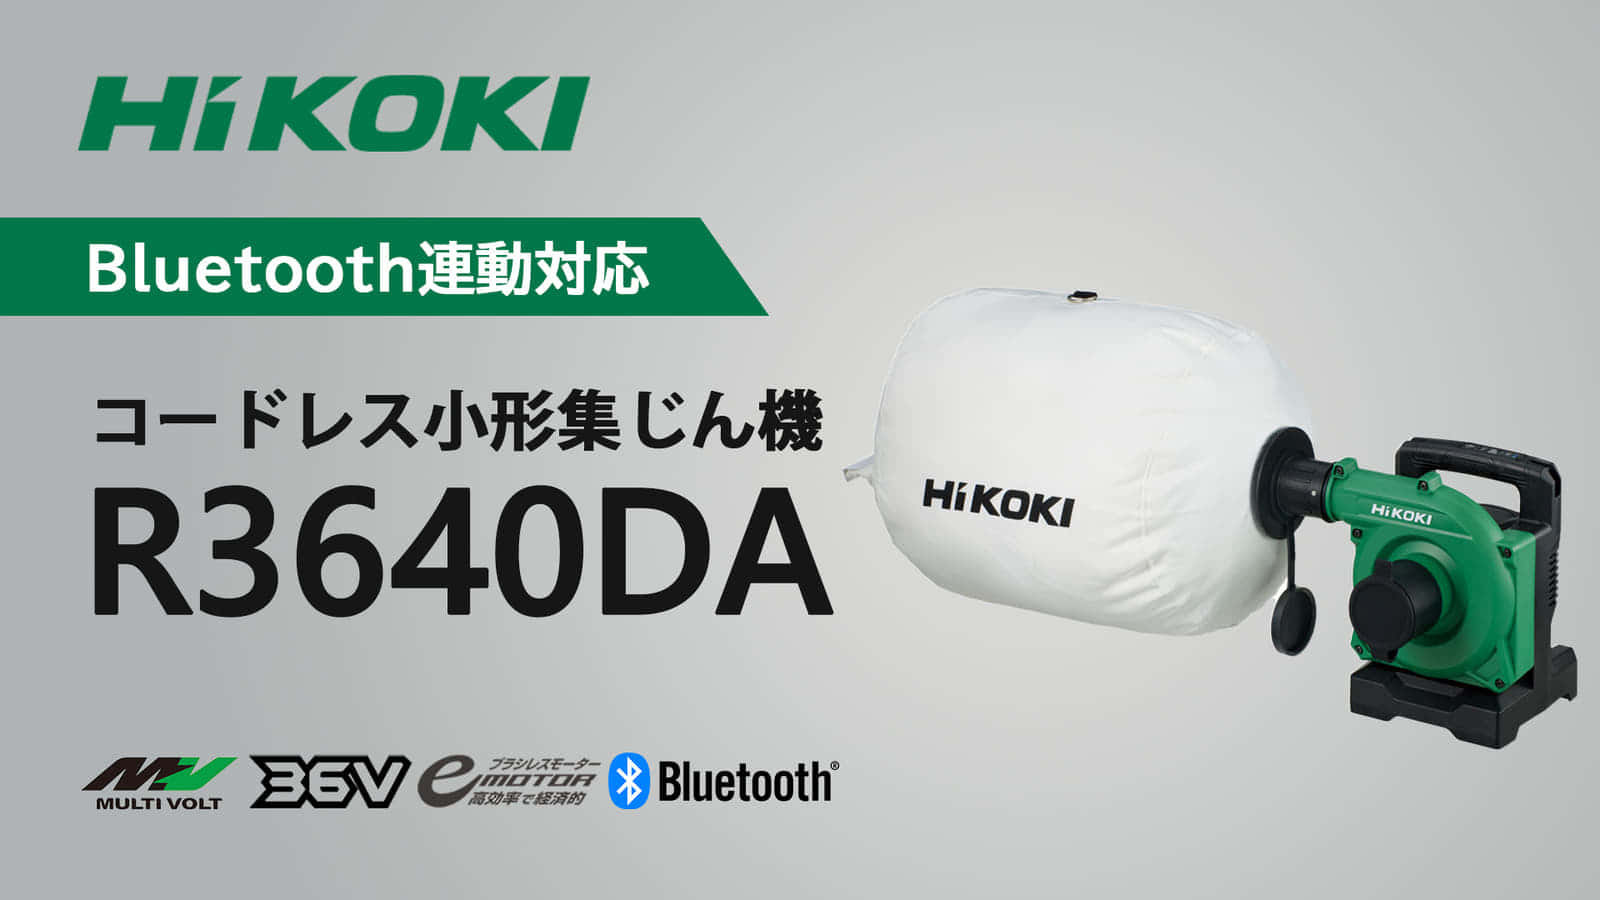 HiKOKI R3640DA コードレス小形集じん機を発売、ハンディサイズで 